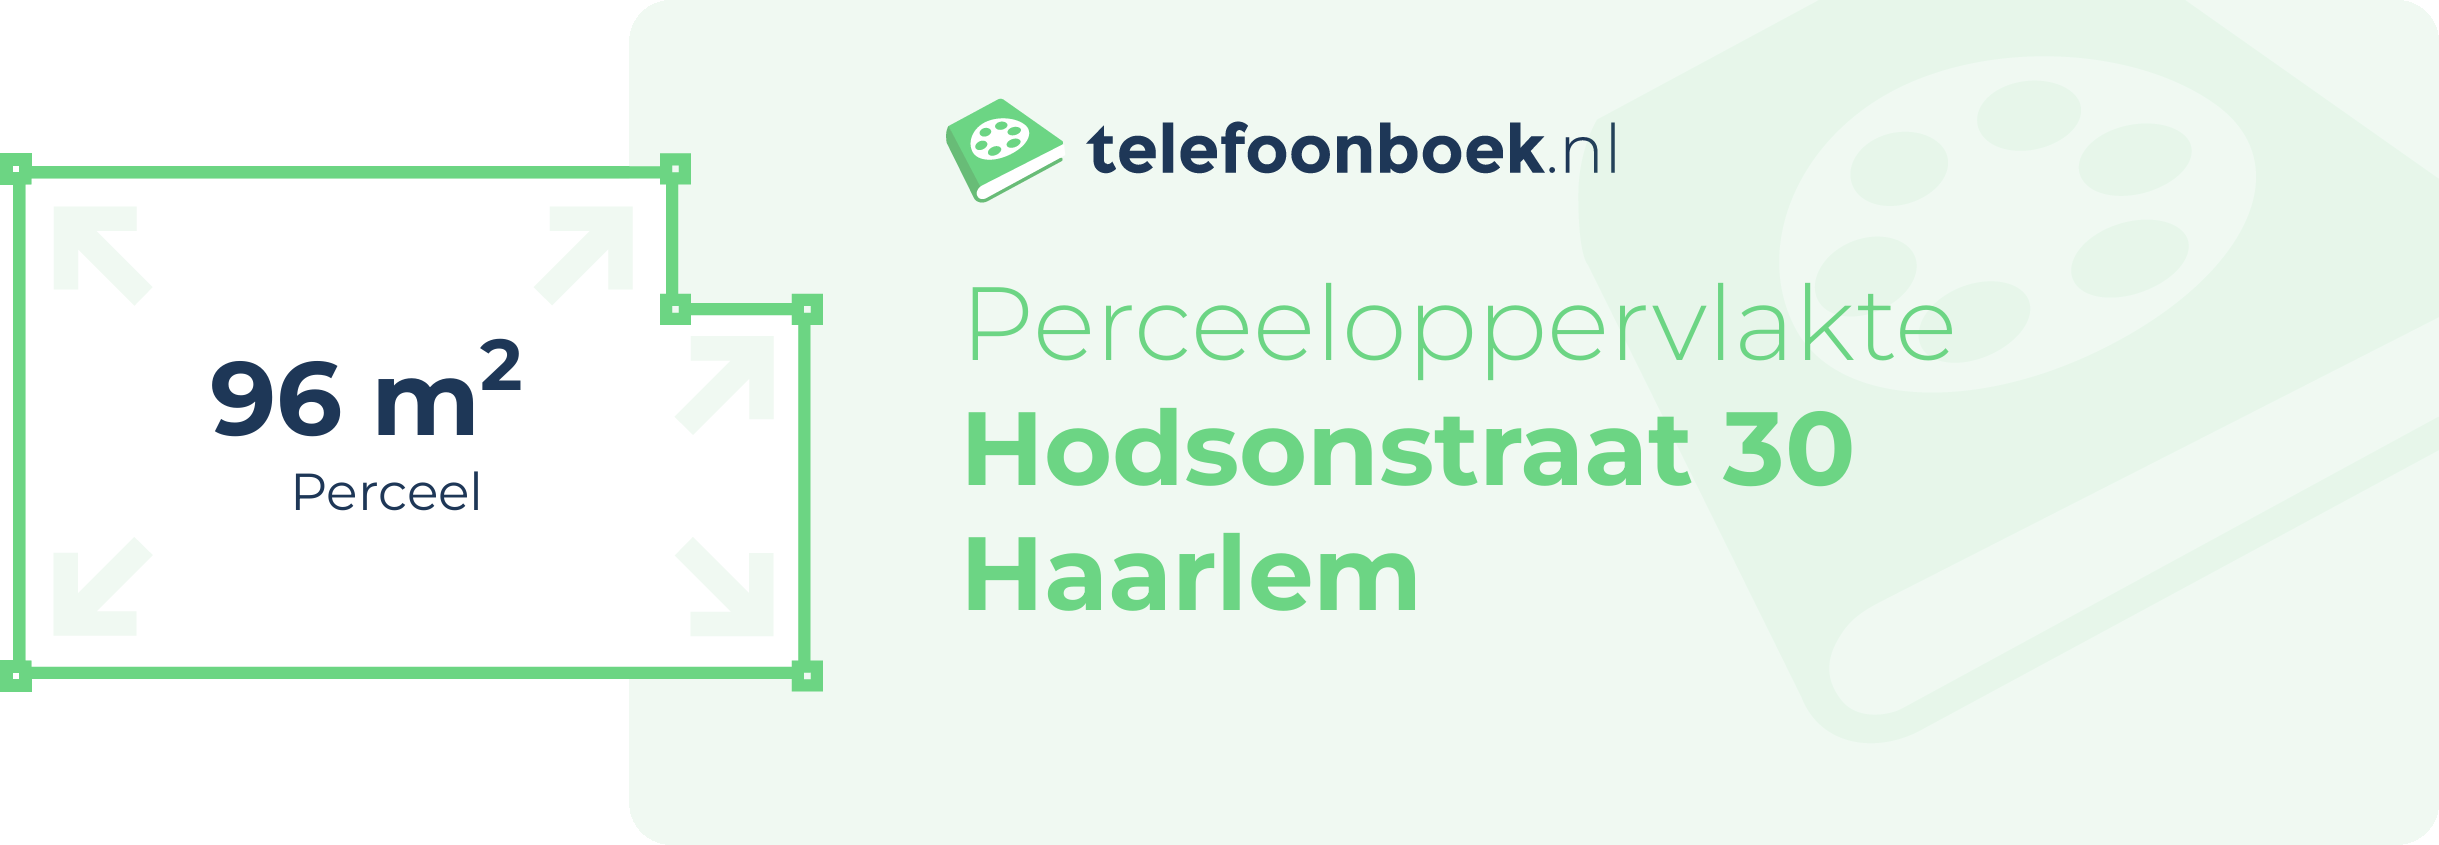 Perceeloppervlakte Hodsonstraat 30 Haarlem